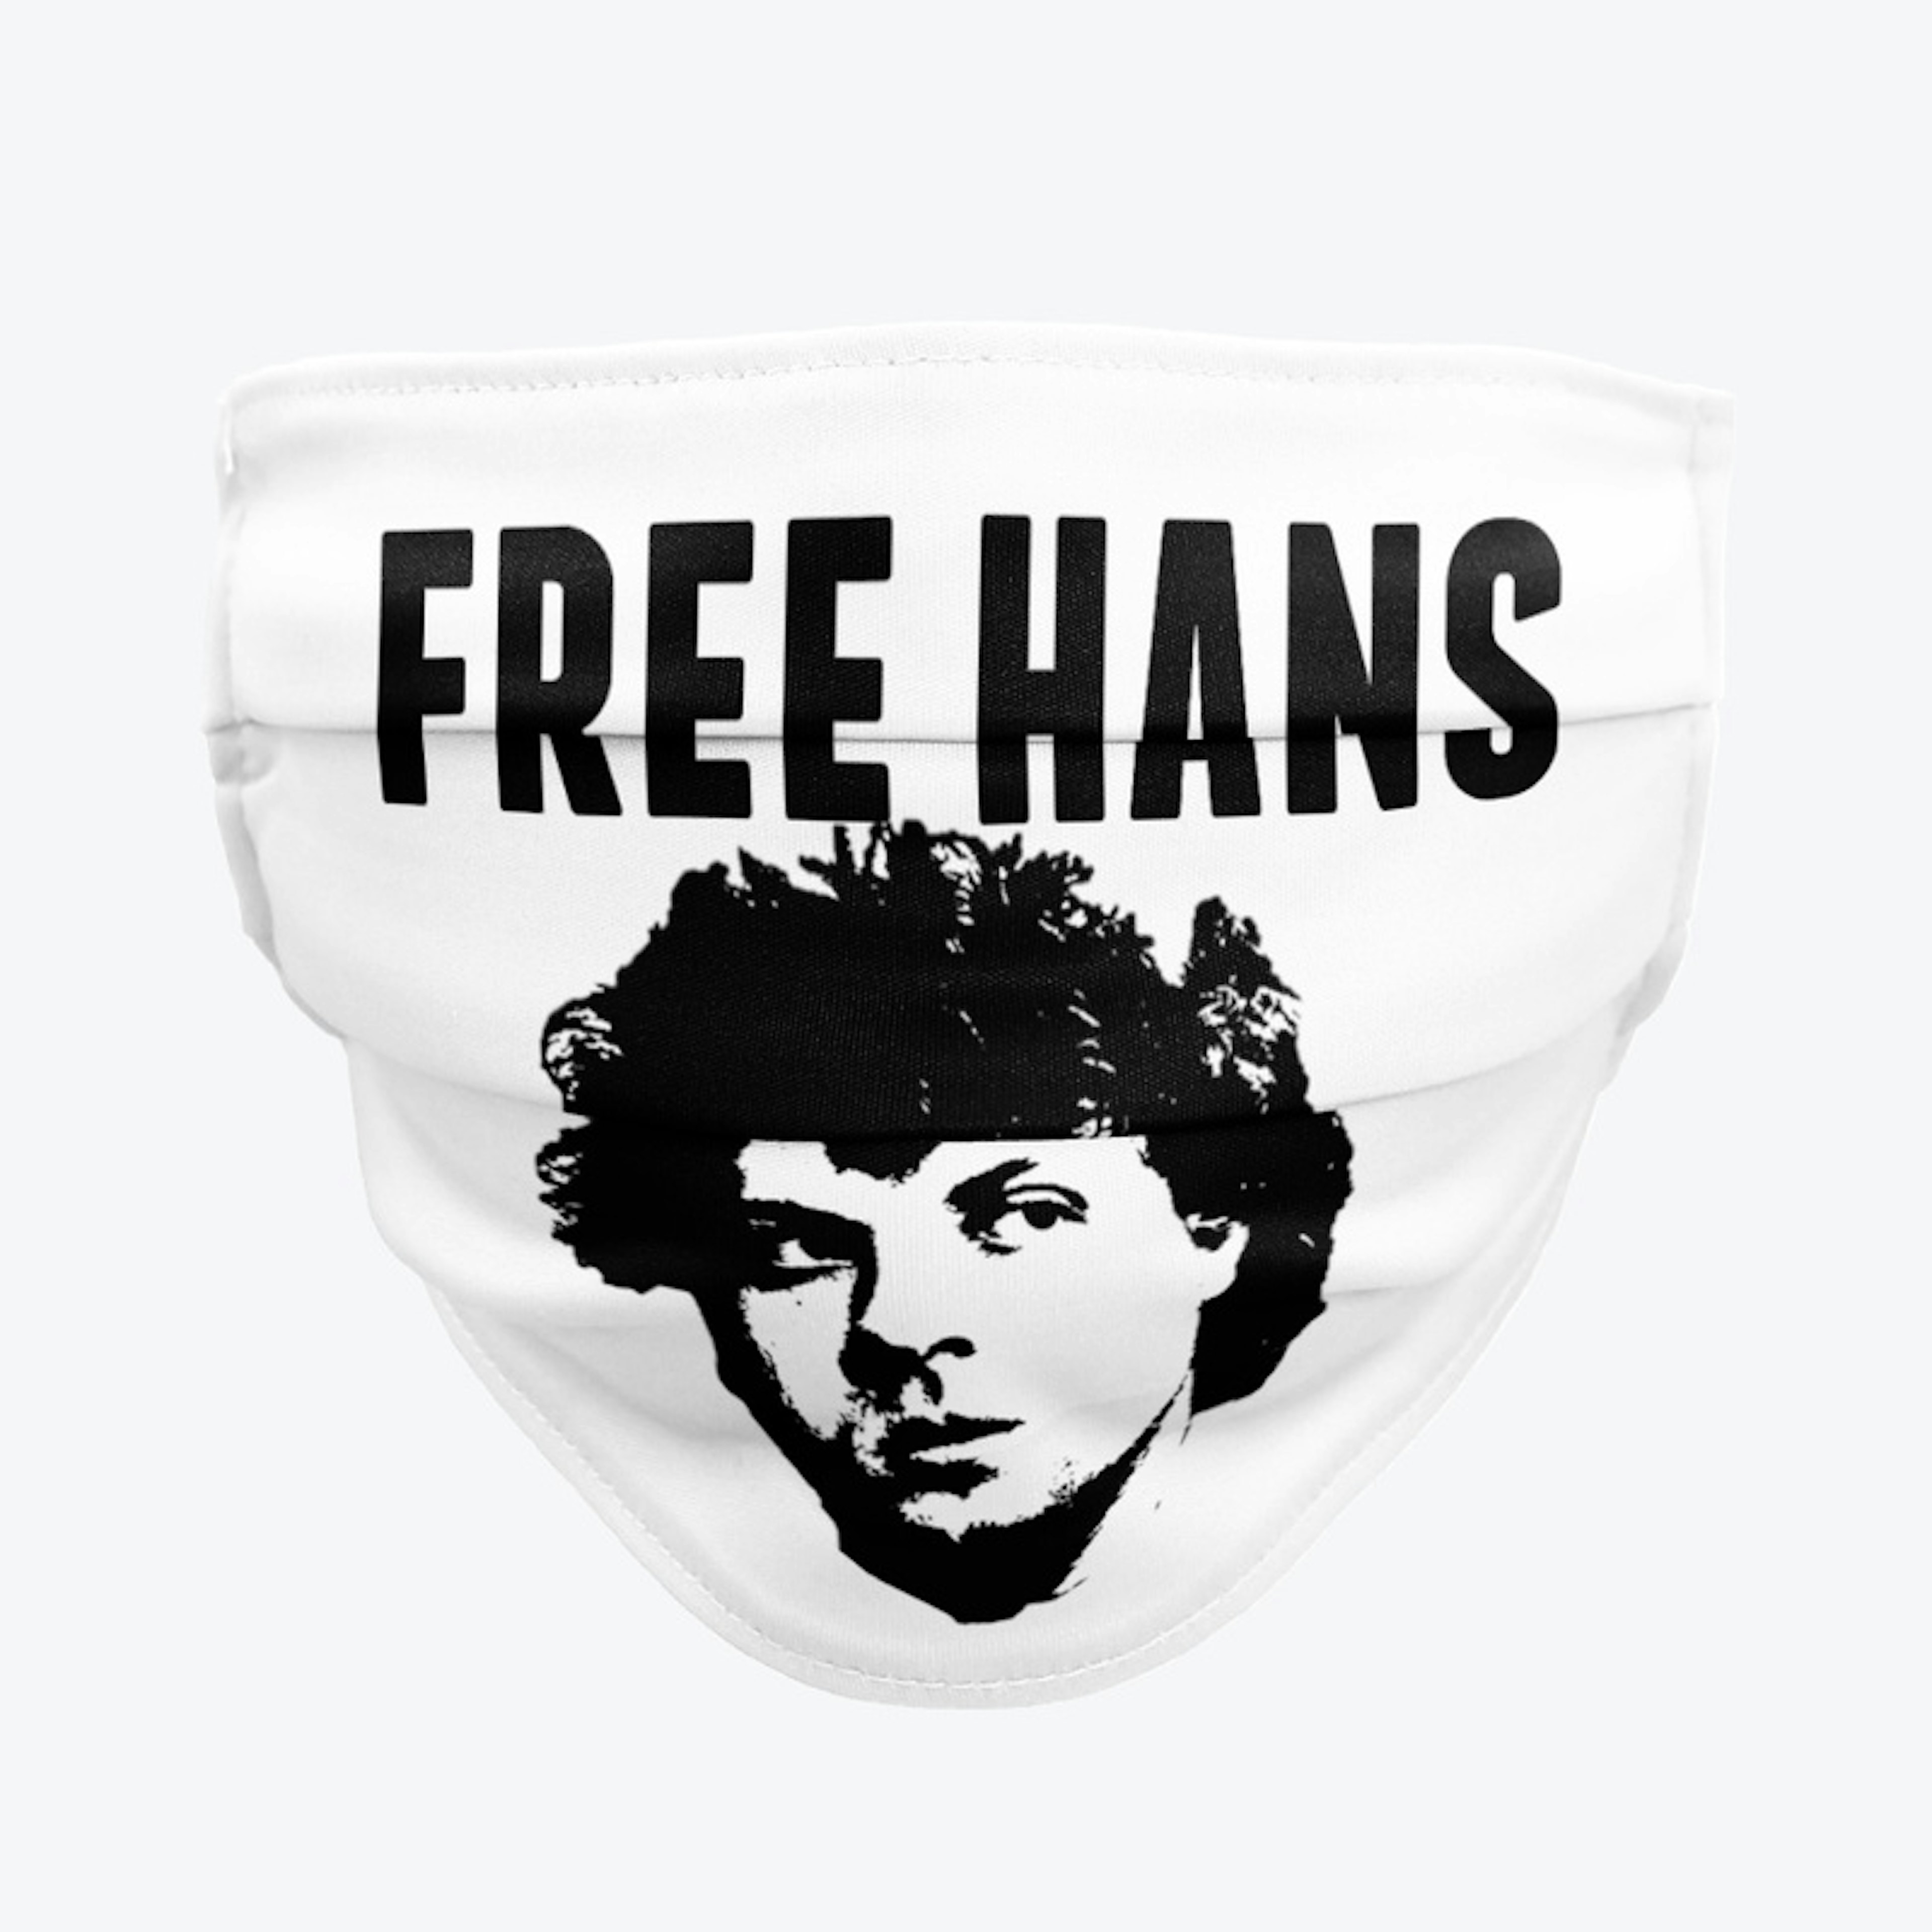 FREE HANS